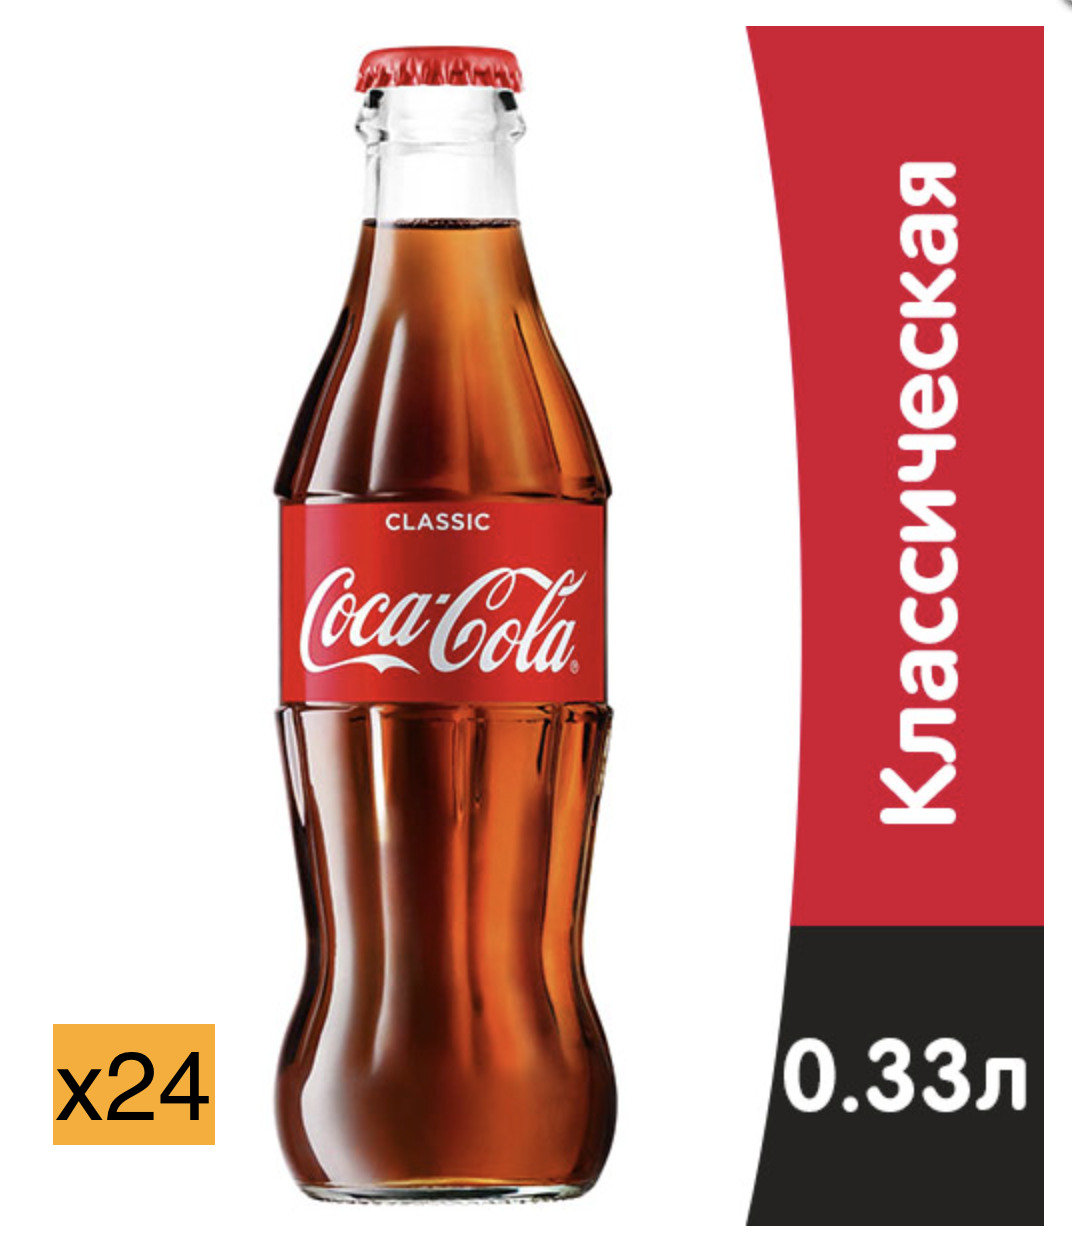 Coca-cola glass pitcher